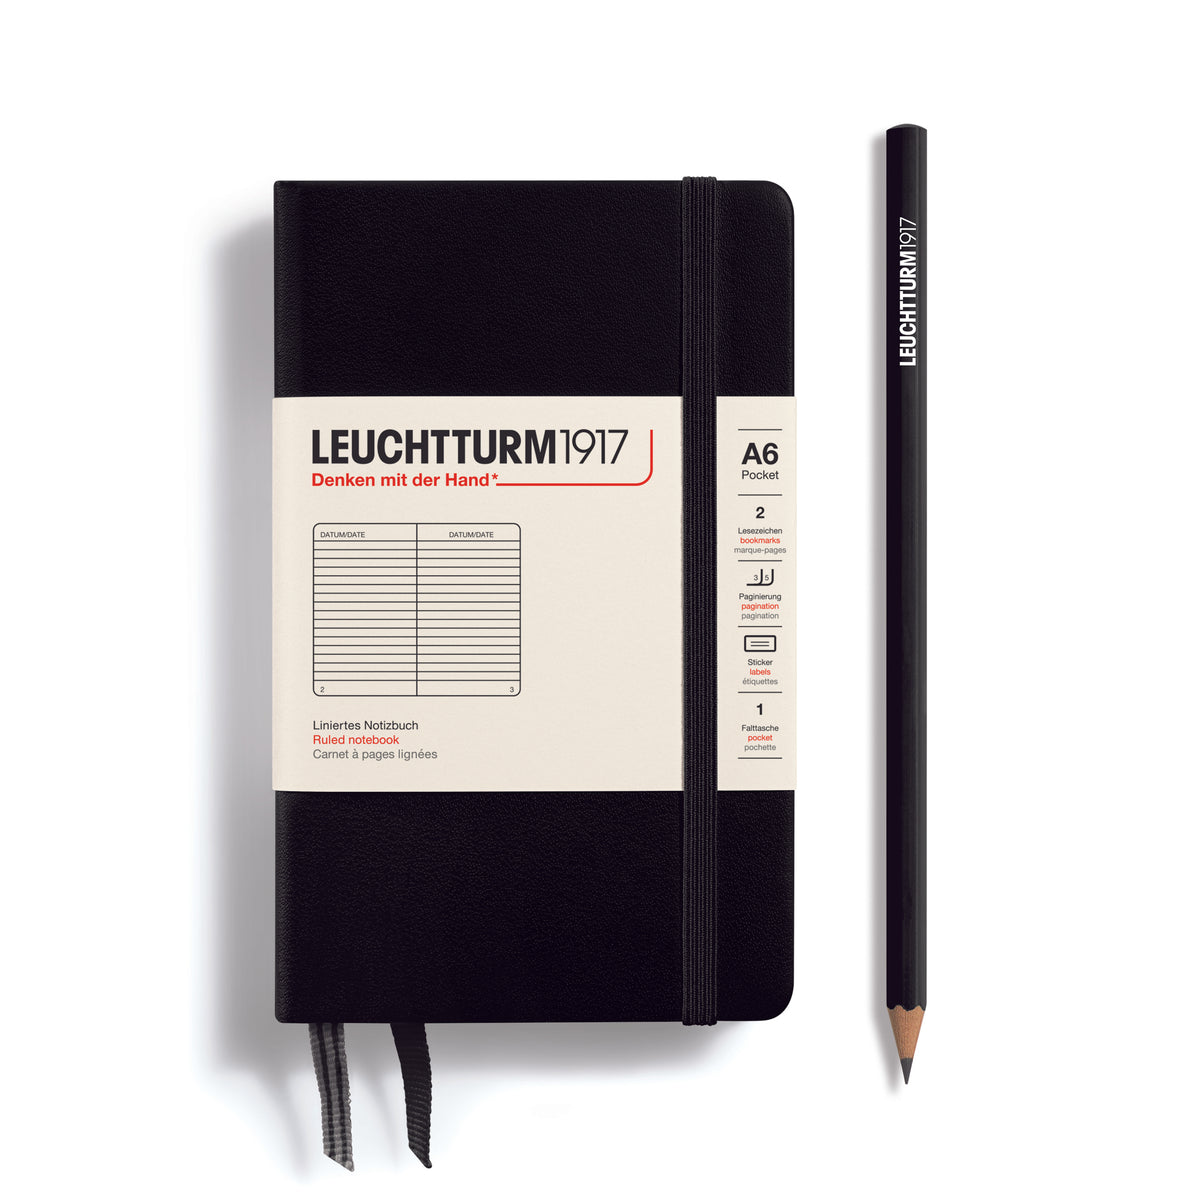 Leuchtturm1917 Notebook A6 Pocket Hardcover in black - Penny Black - ruled